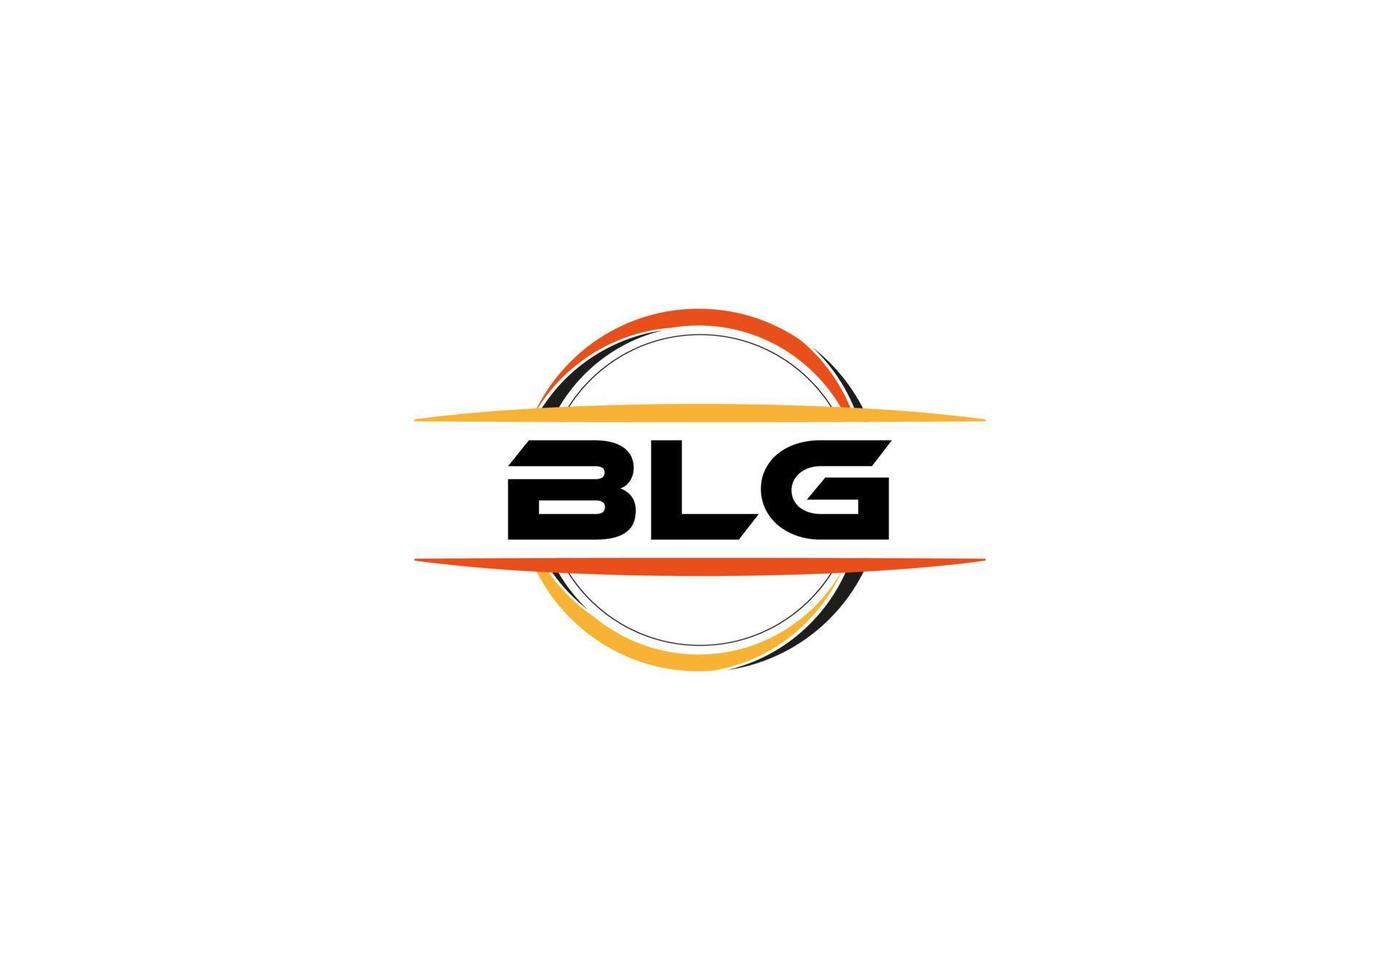 blg letra realeza elipse forma logo. blg cepillo Arte logo. blg logo para un compañía, negocio, y comercial usar. vector